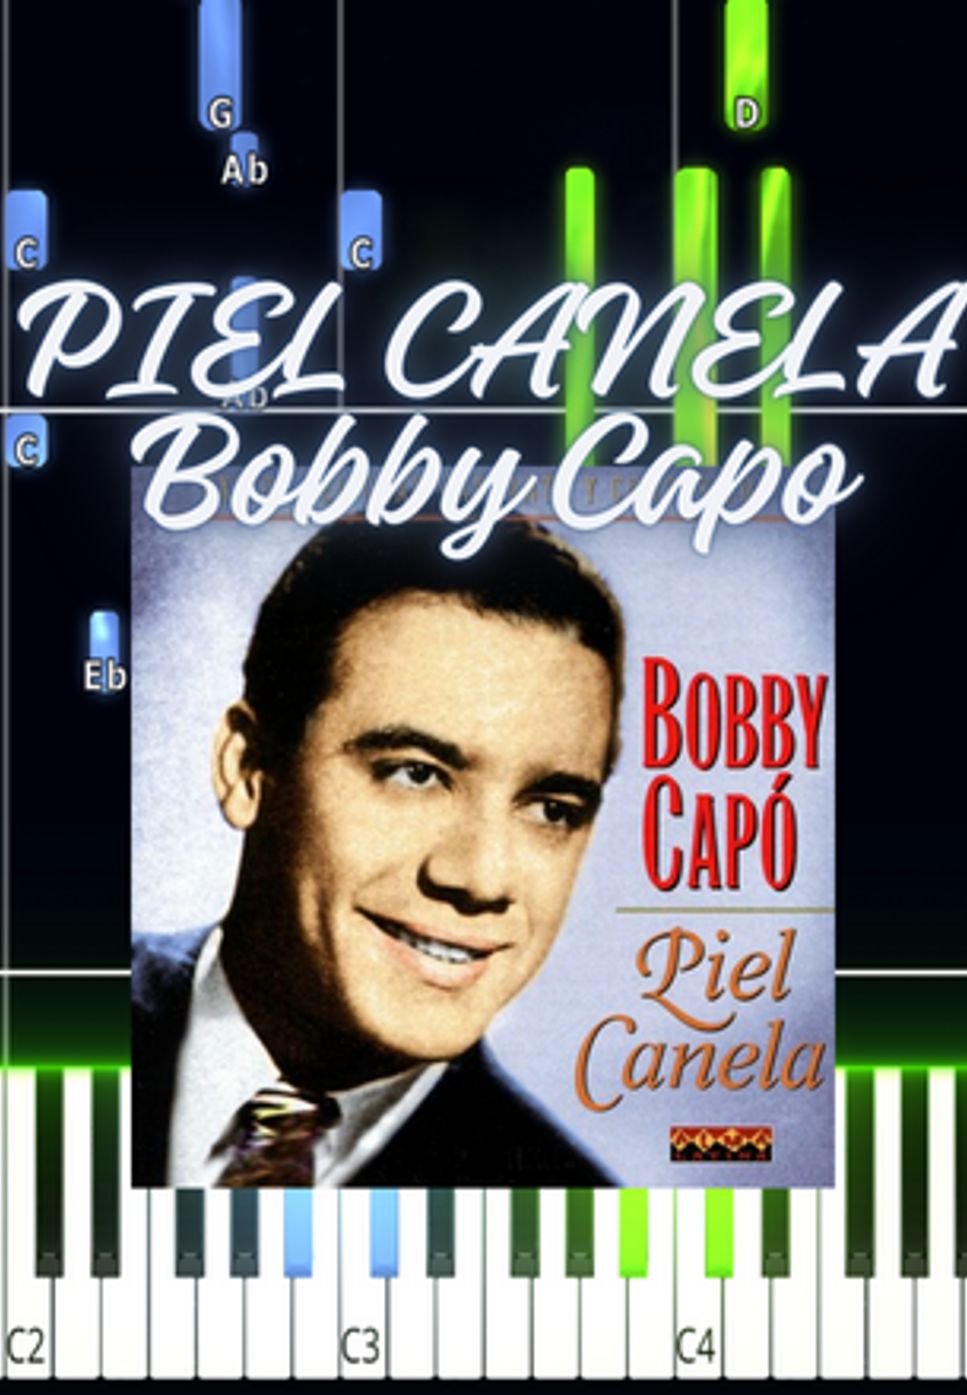 Bobby Capo - Piel Canela by Marco D.